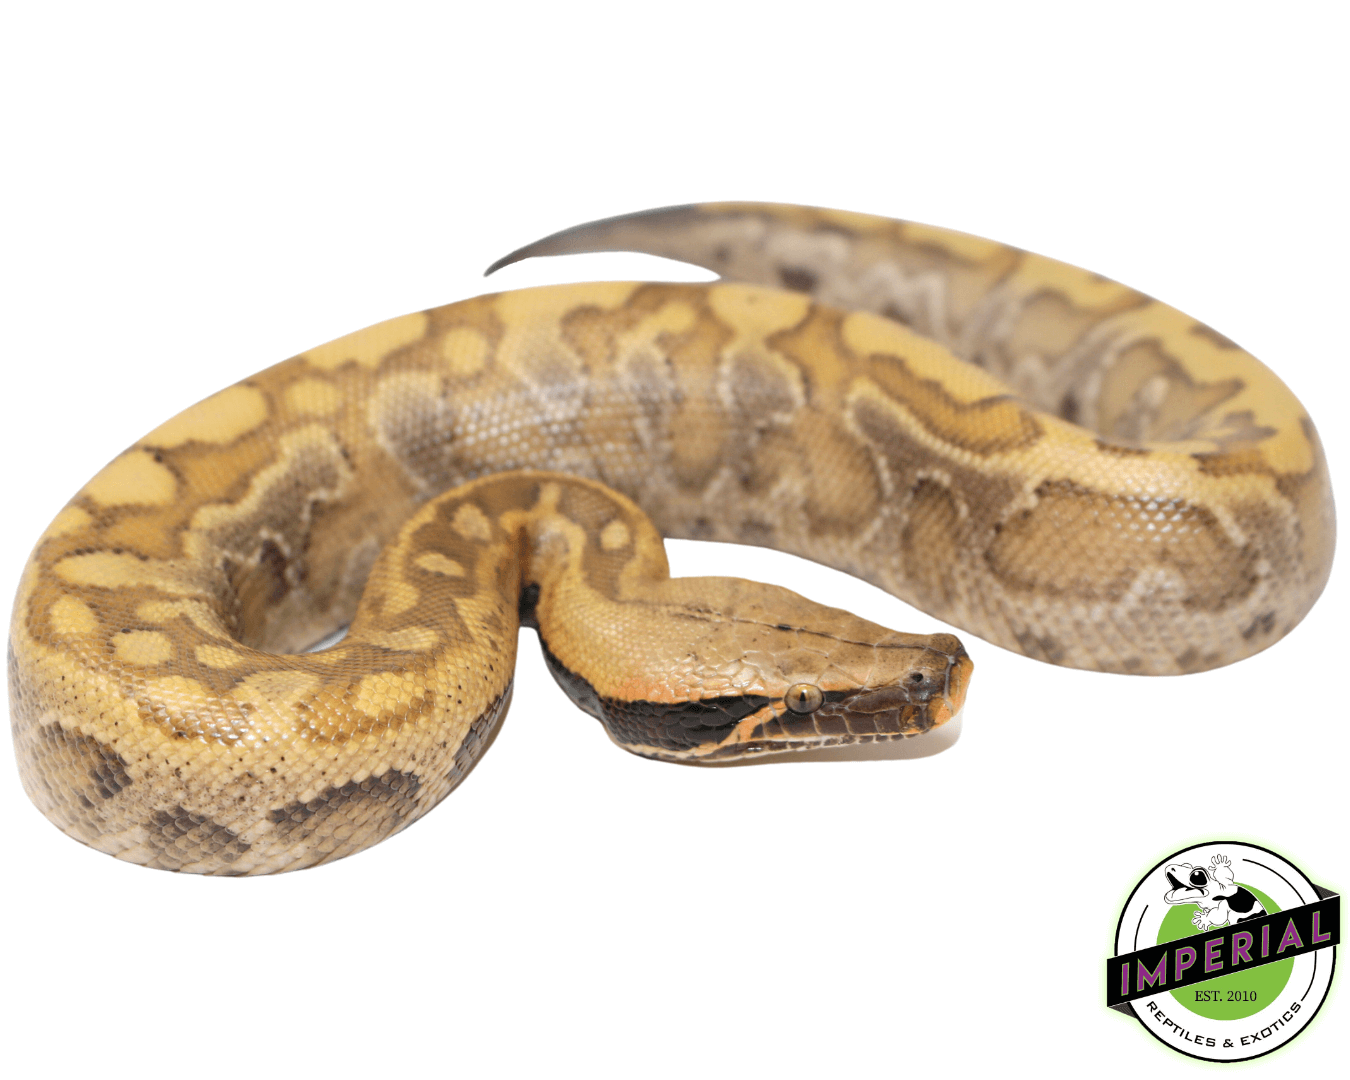 blonde Bangka blood python for sale, buy reptiles online